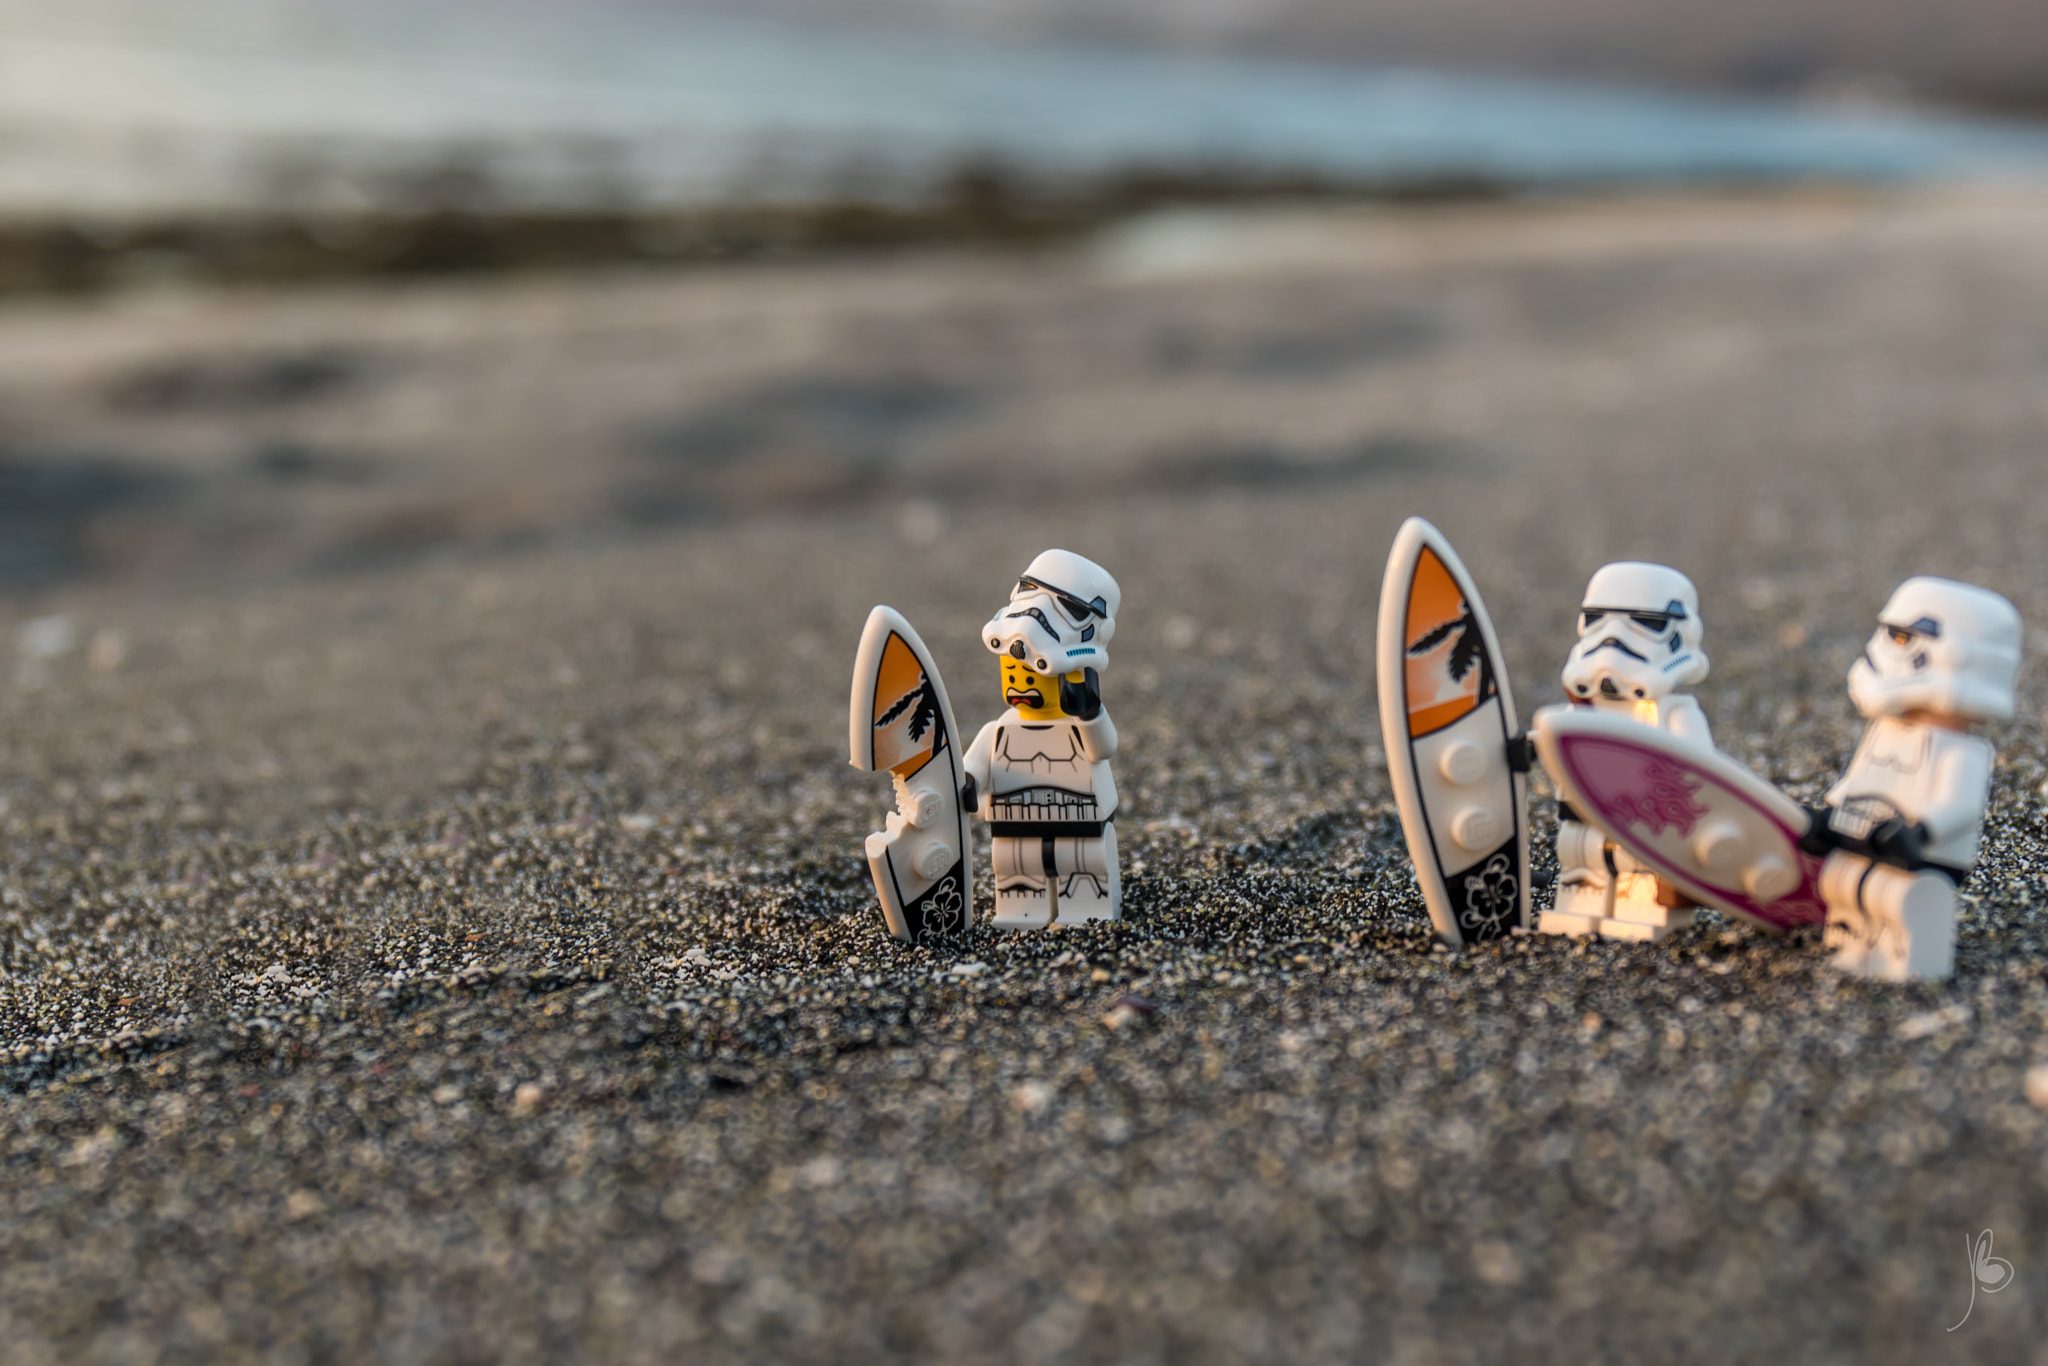 General 2048x1366 LEGO Star Wars humor toys sand depth of field gray surfboards Star Wars Humor figurines closeup miniatures